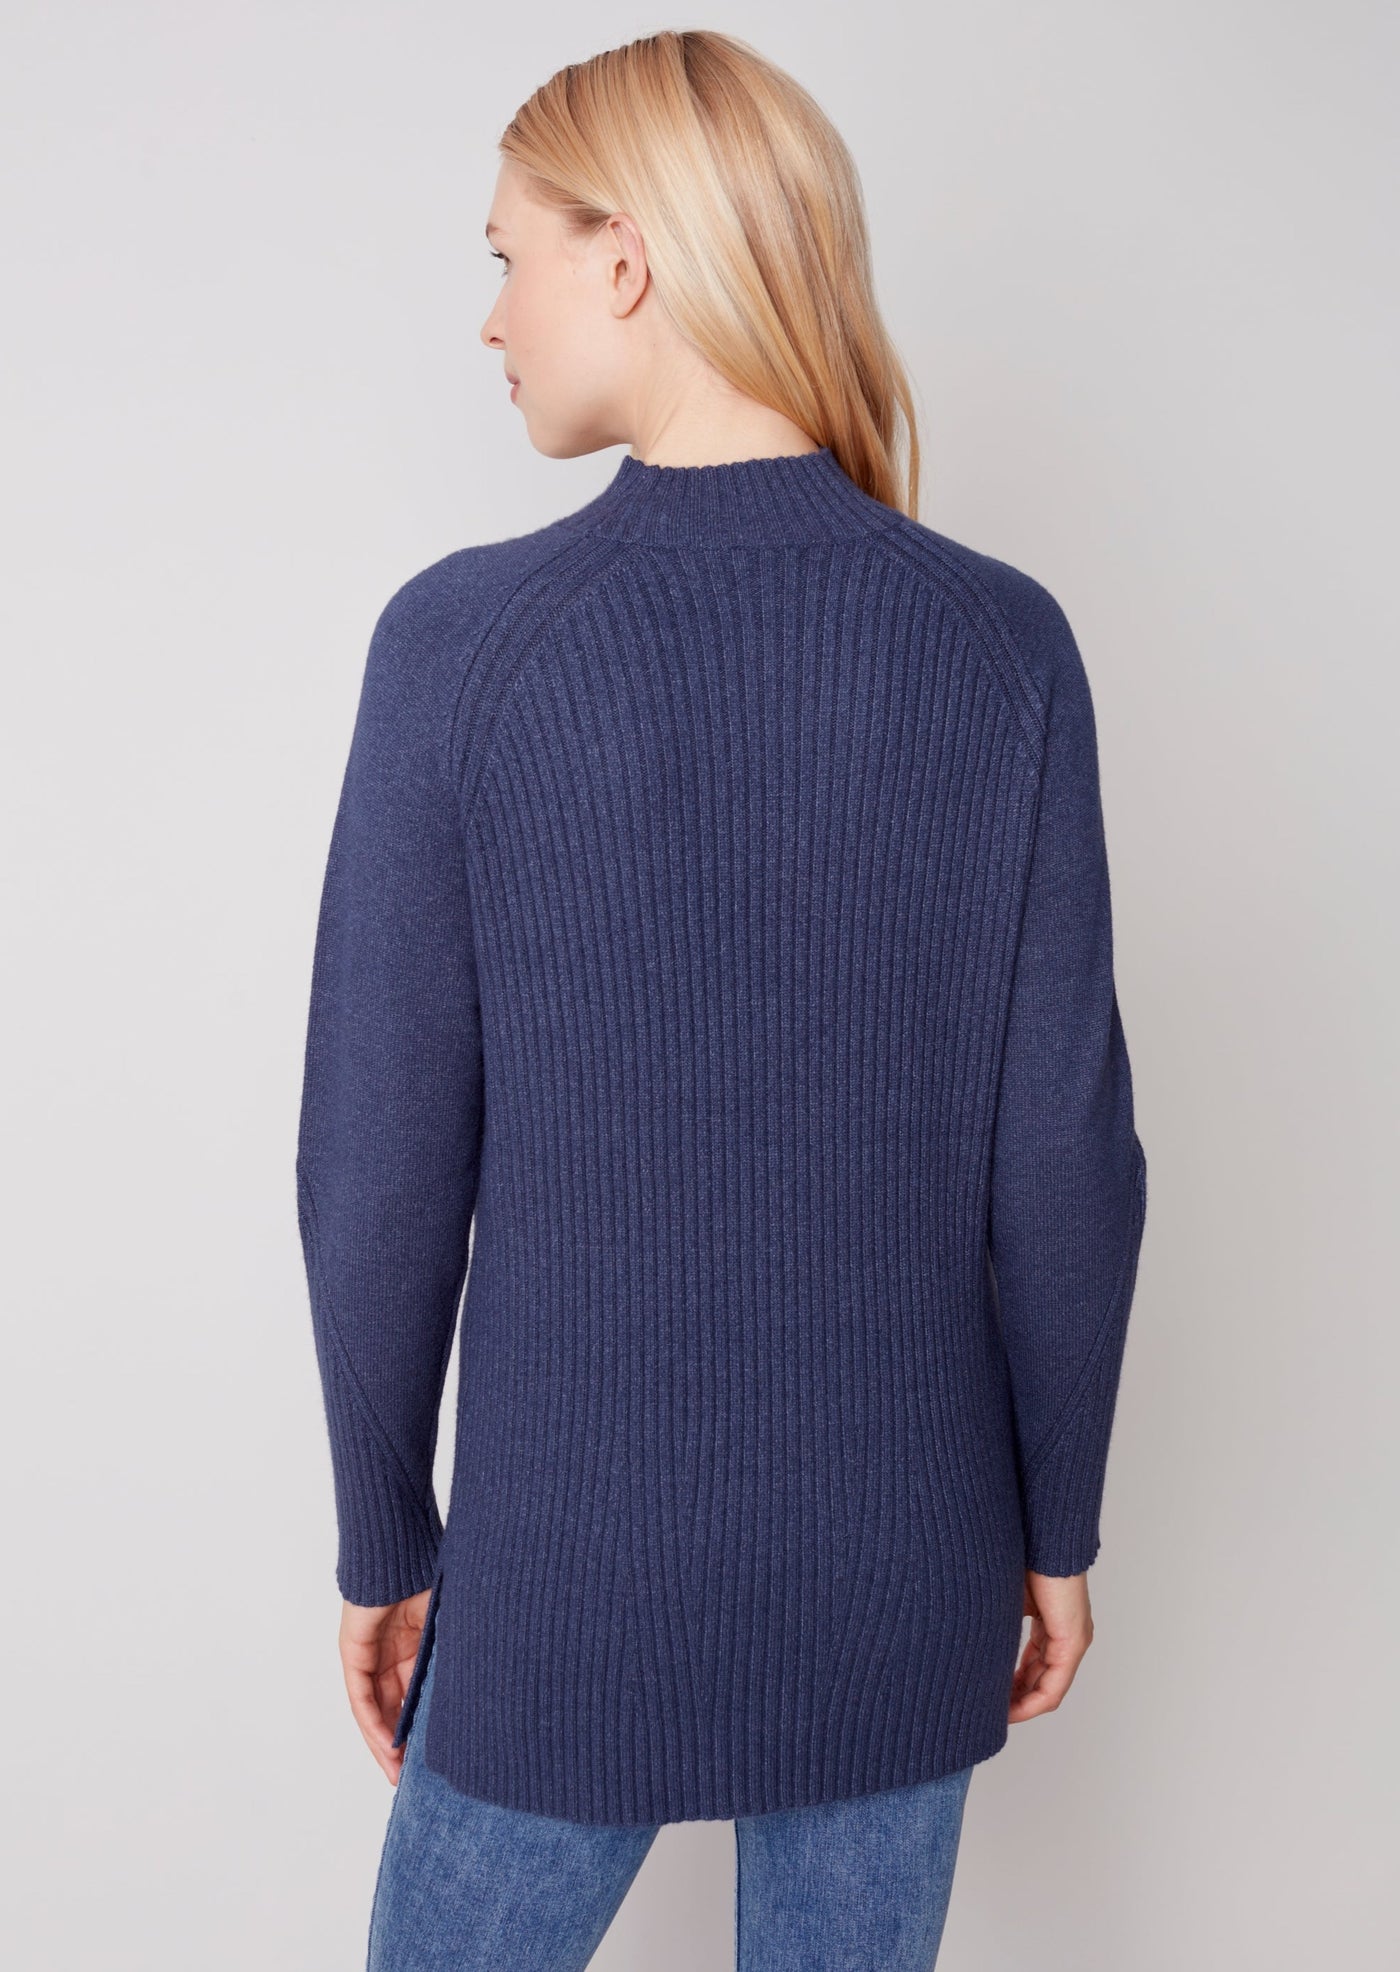 Charlie B - Mock Neck Raglan Sweater